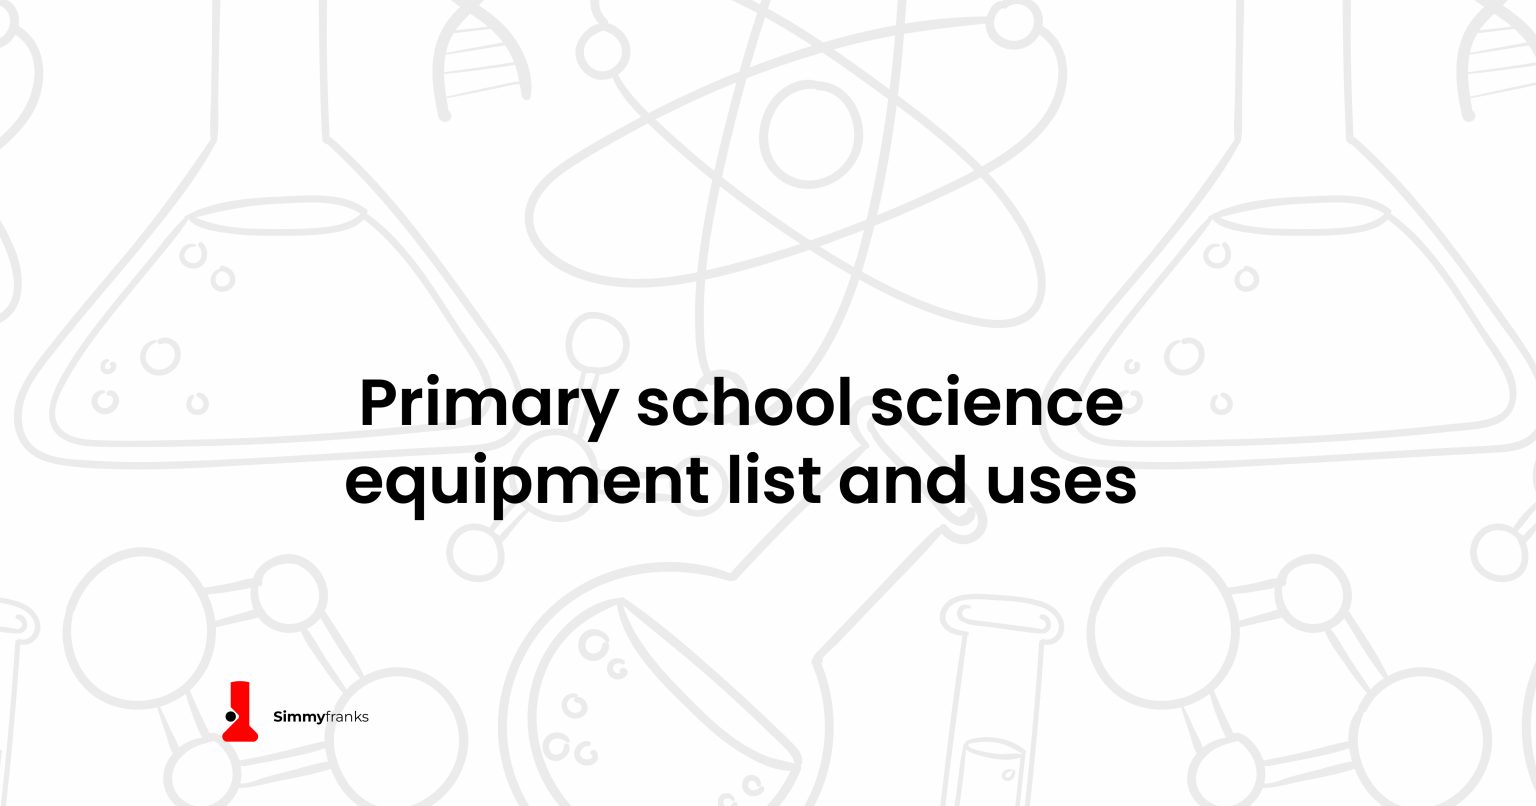 Primary school science equipment